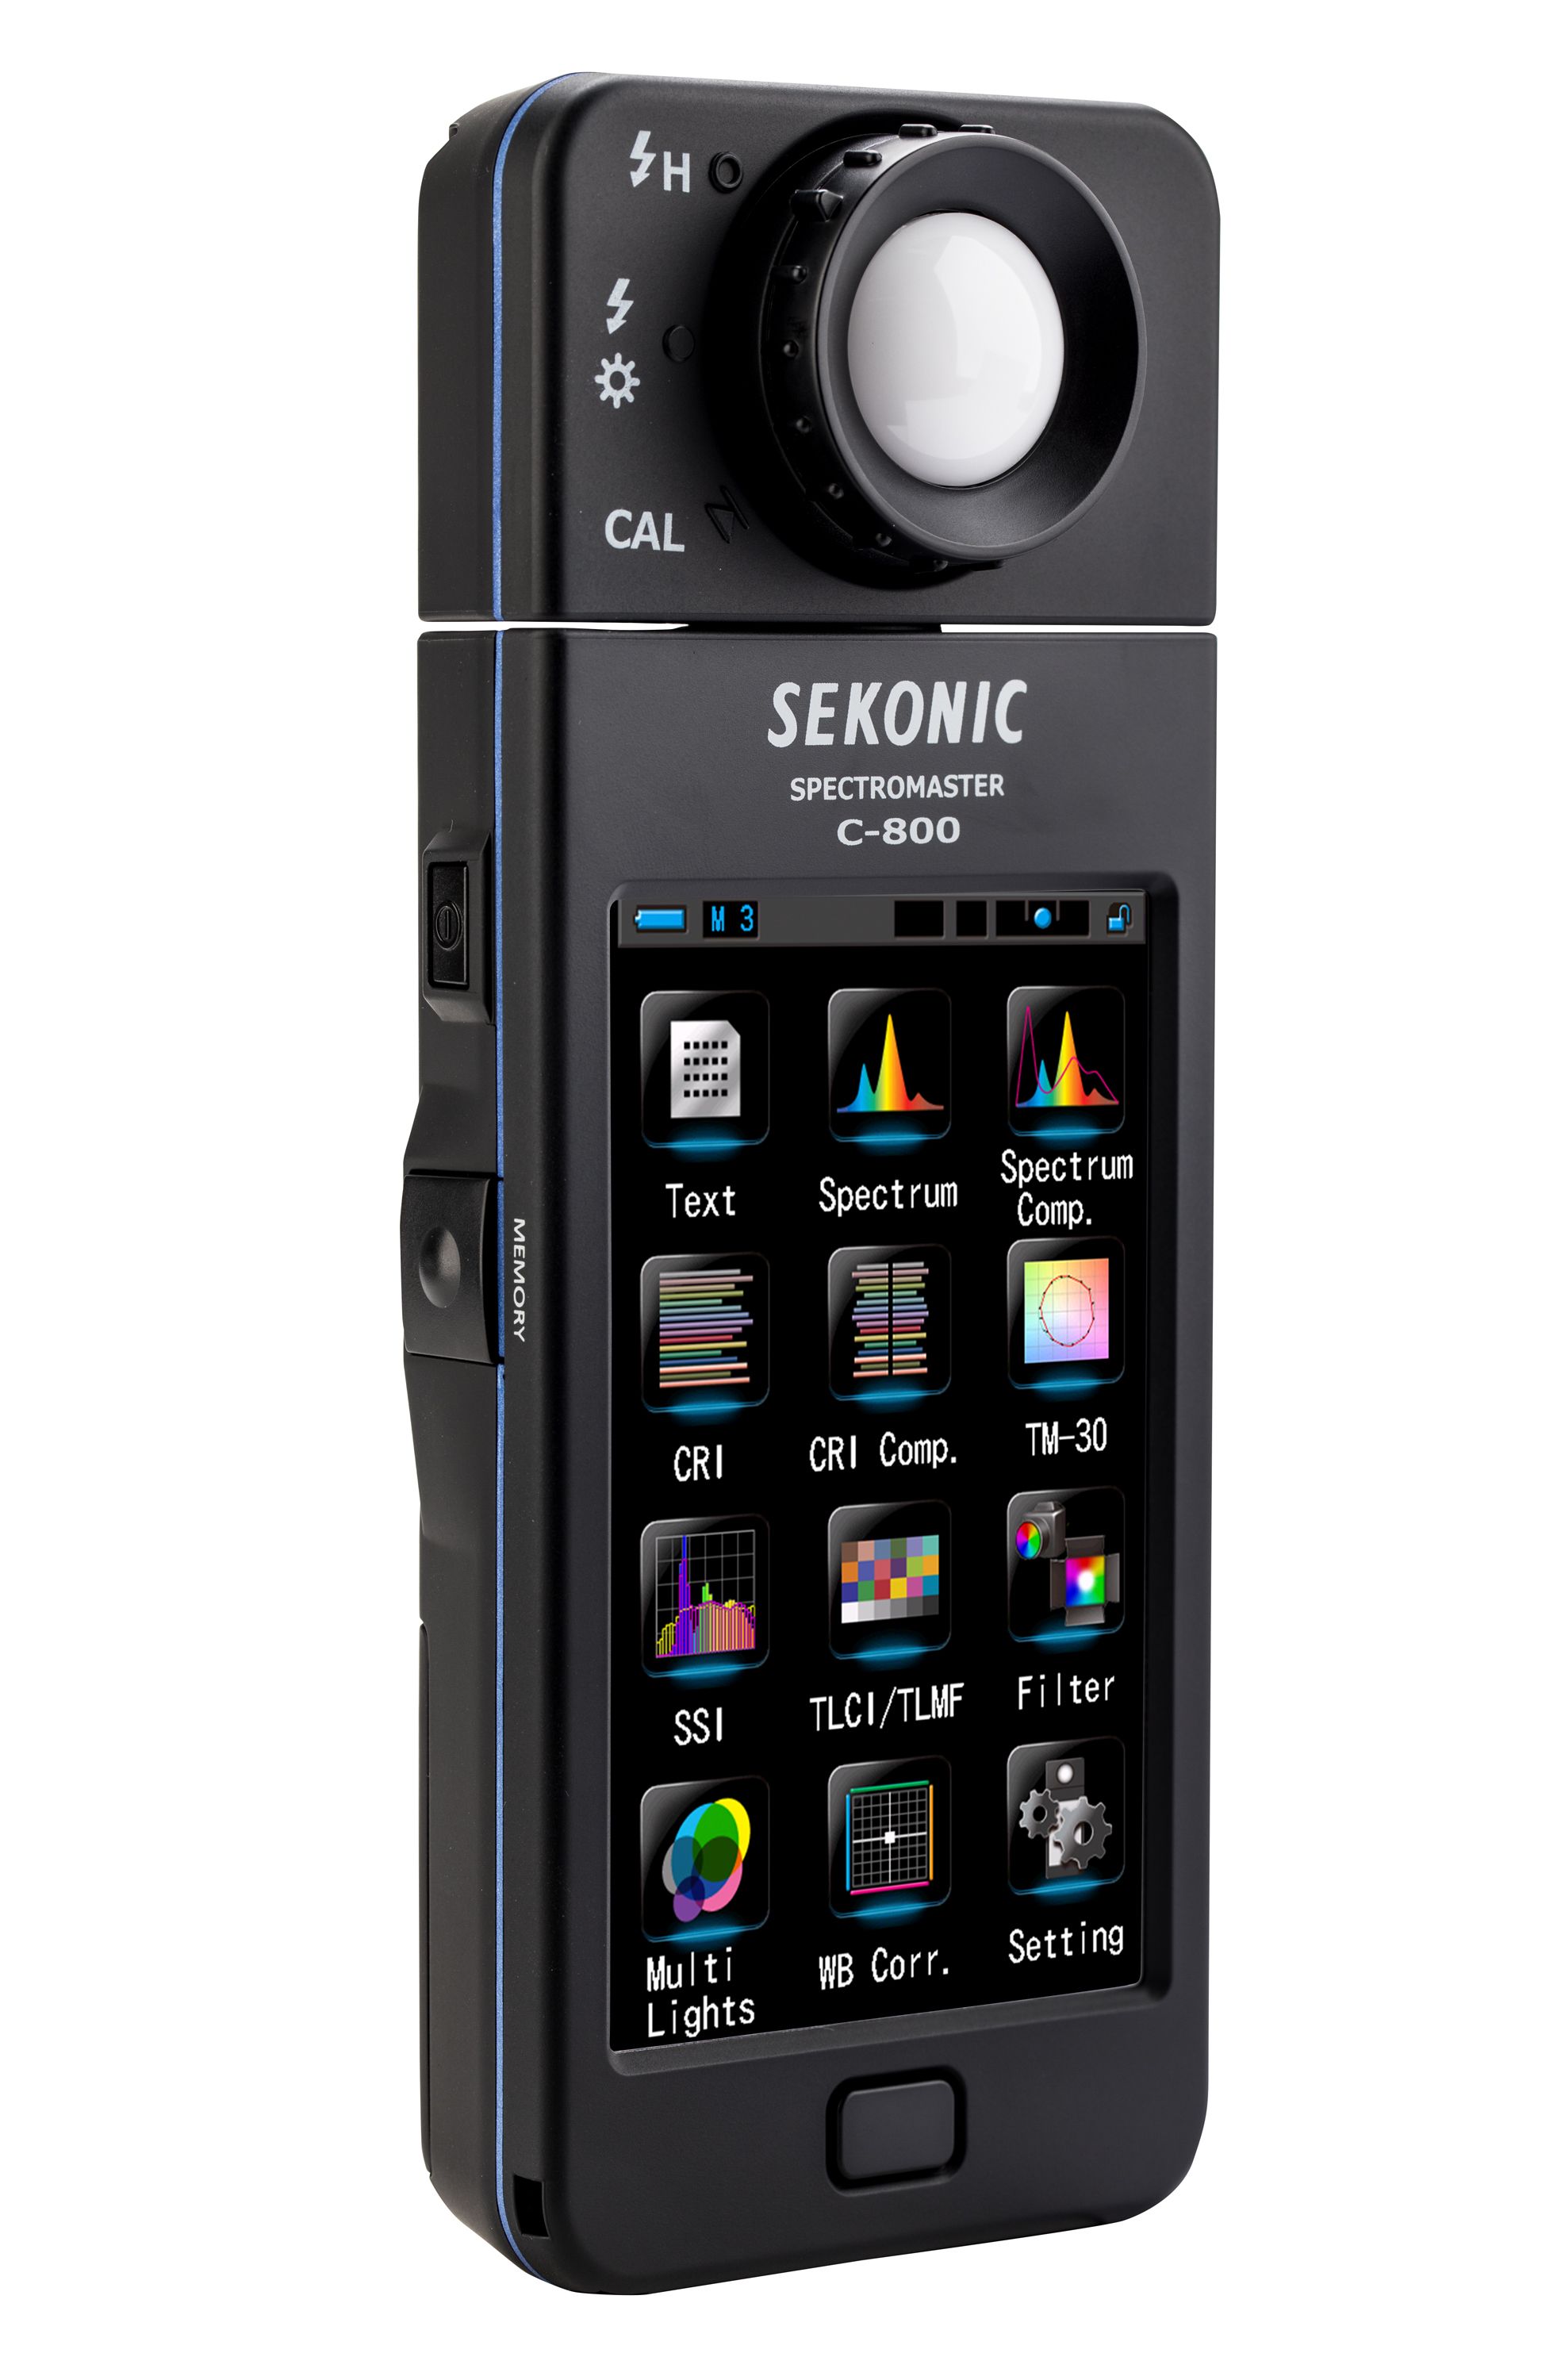 Sekonic C-800 Spectromaster